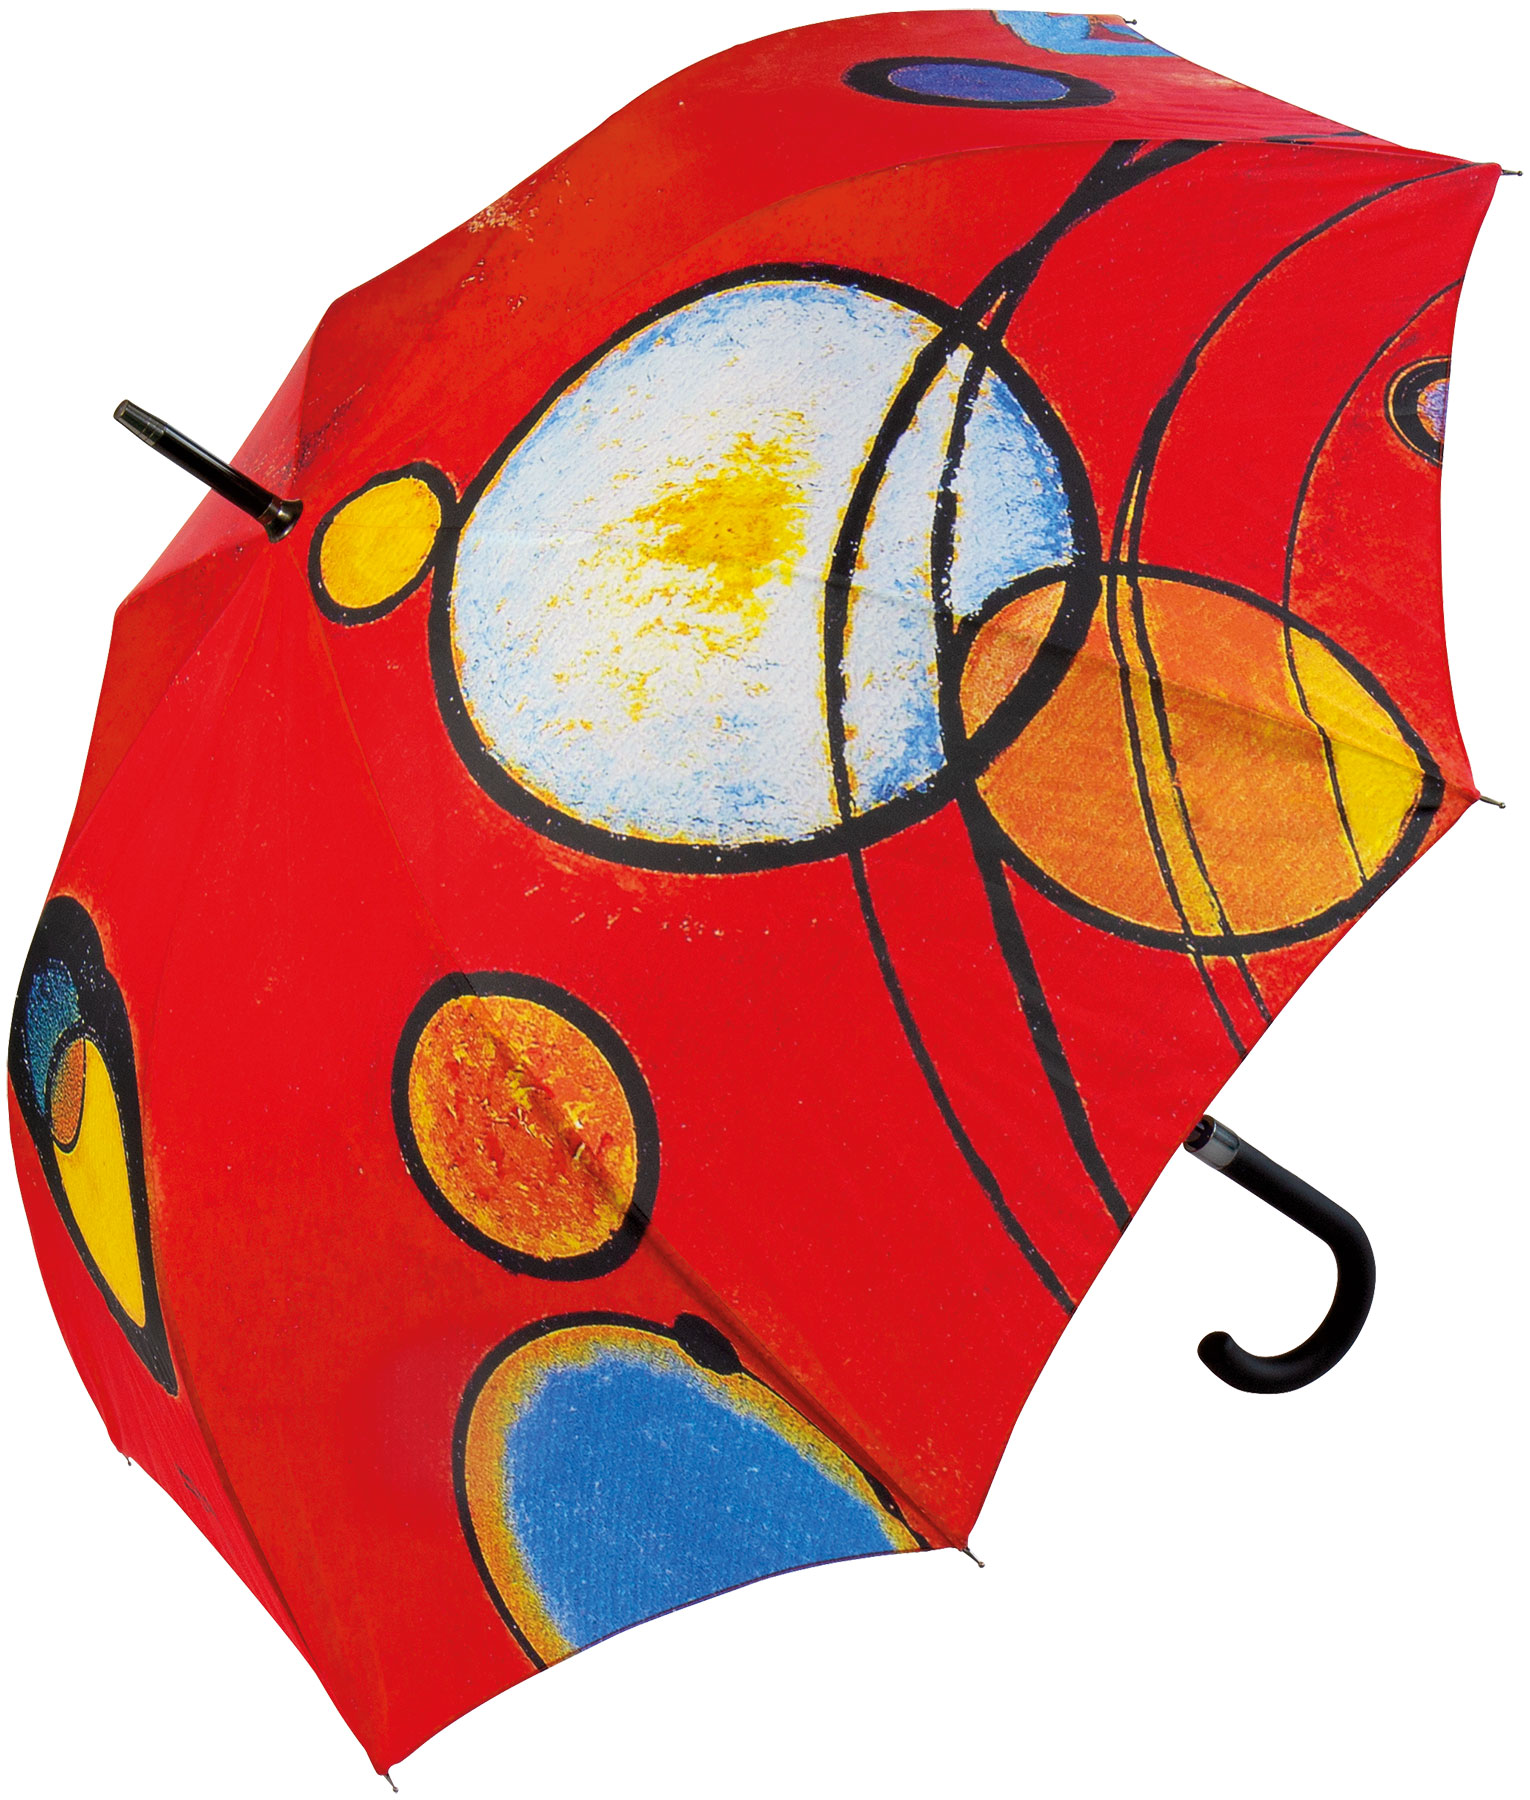 Stick umbrella "Heavy Red" by Wassily Kandinsky